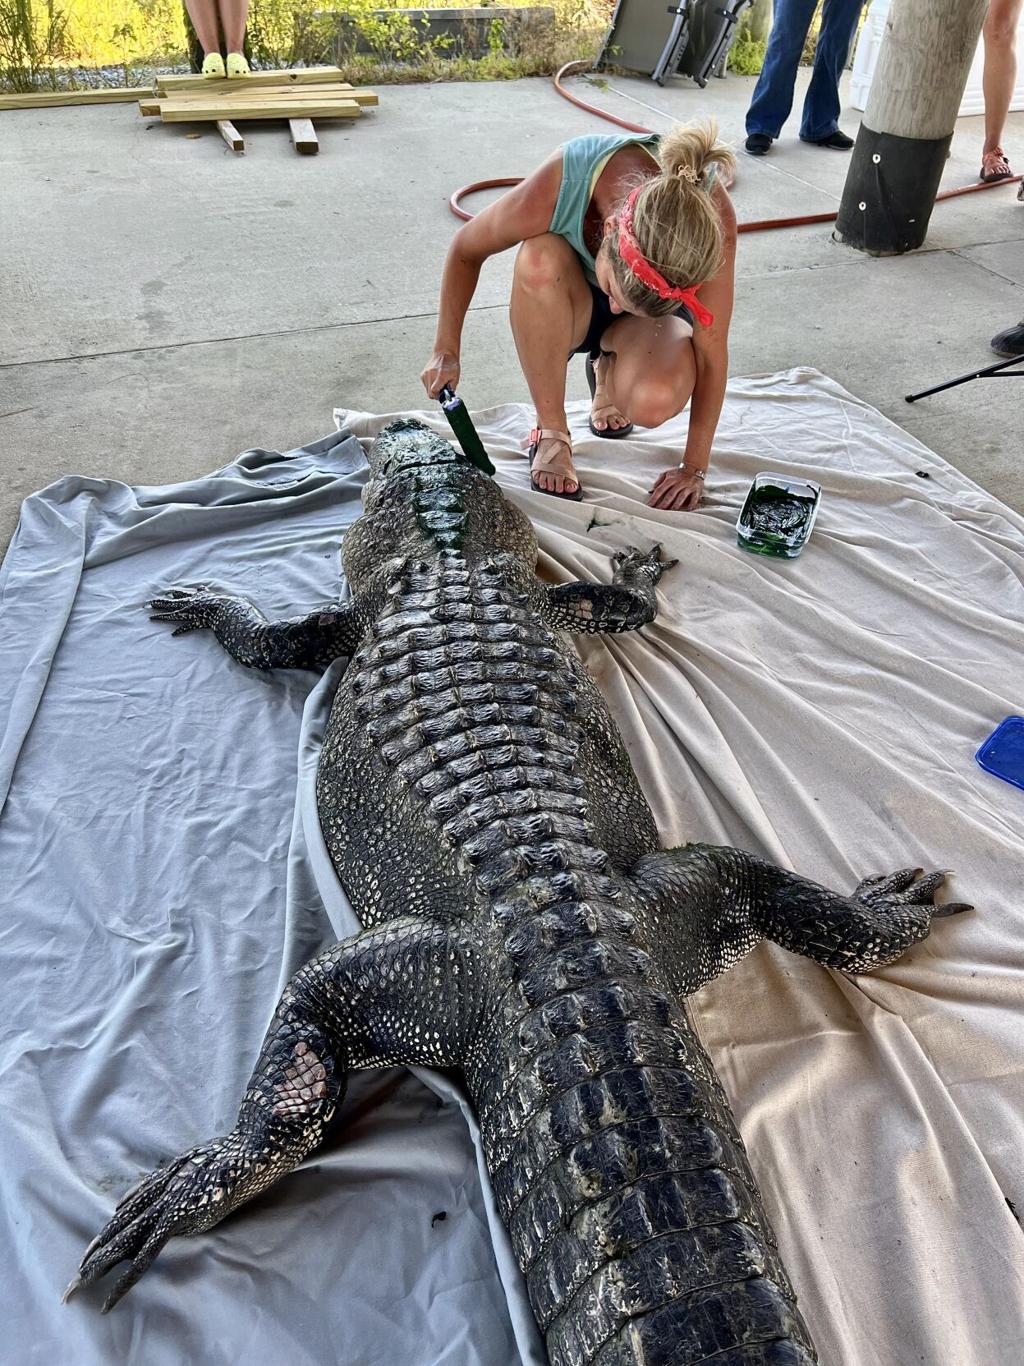 19 Alligators ideas  alligators art, louisiana art, new orleans art